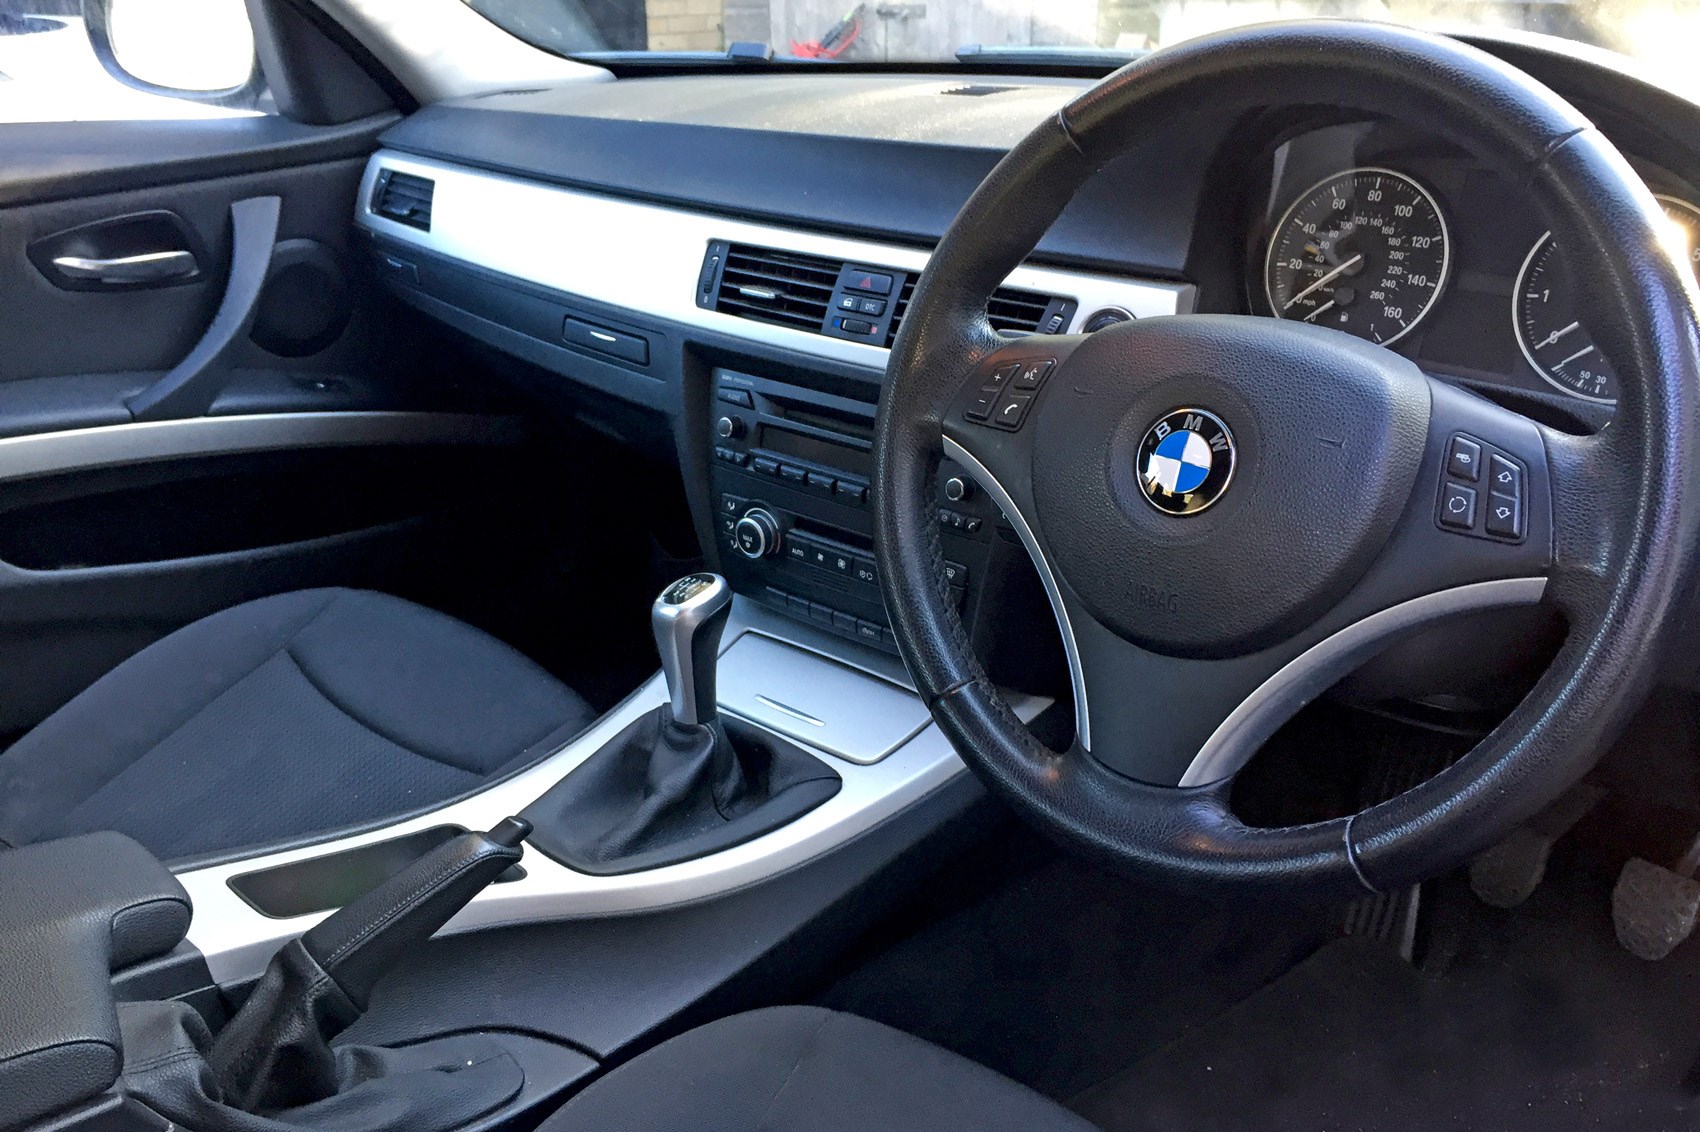 BMW E91 3 Series Touring 330xi specs, dimensions